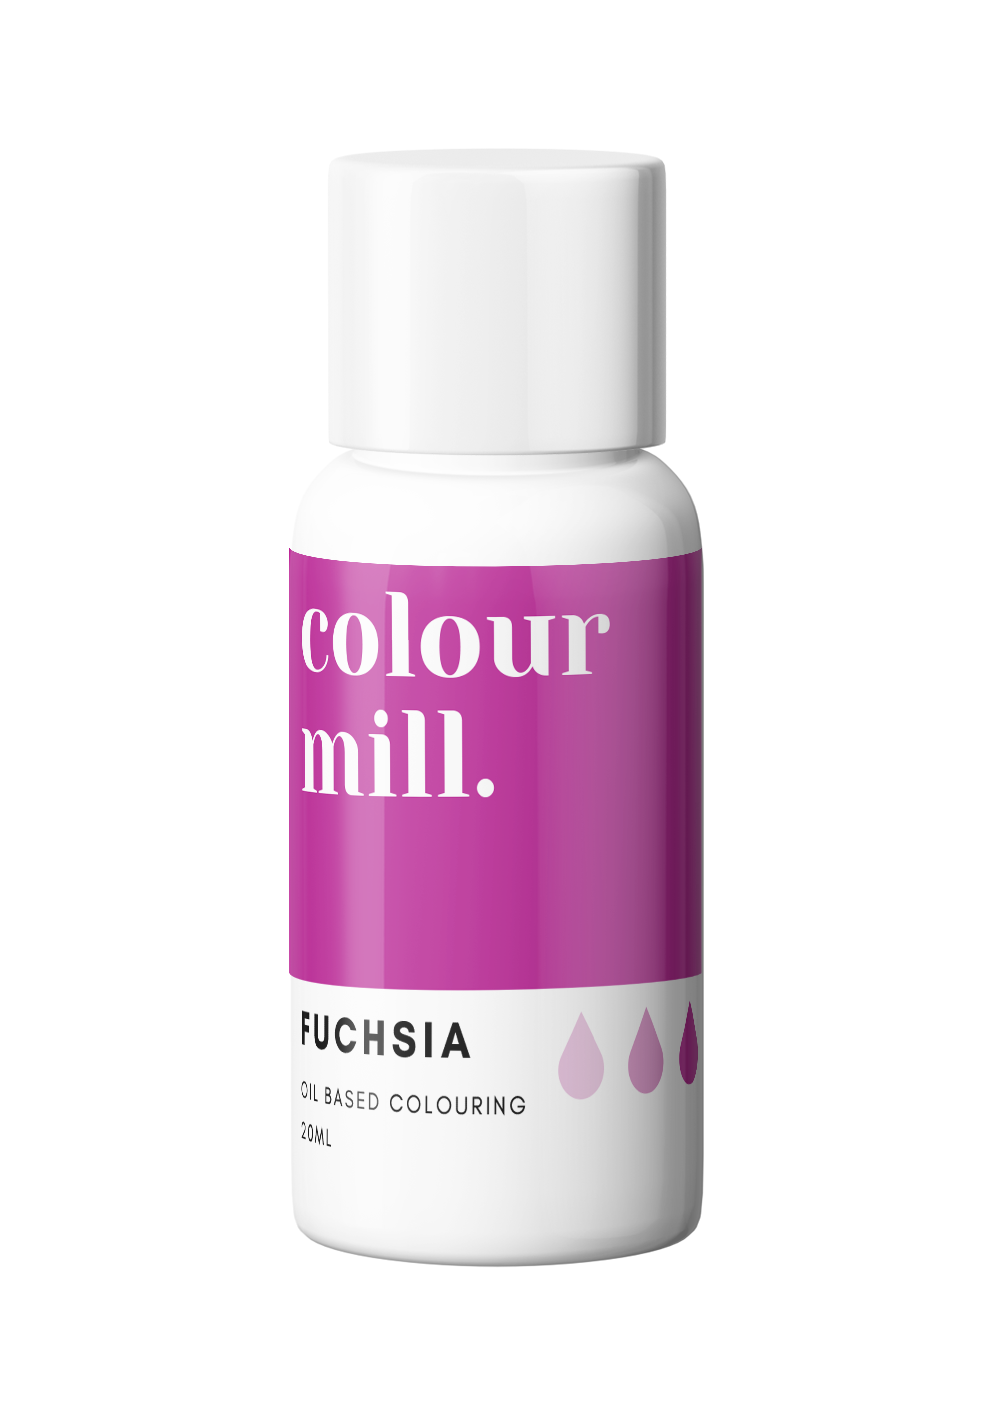 Colour Mill Oil Based Colouring 20ml - Fuchsia